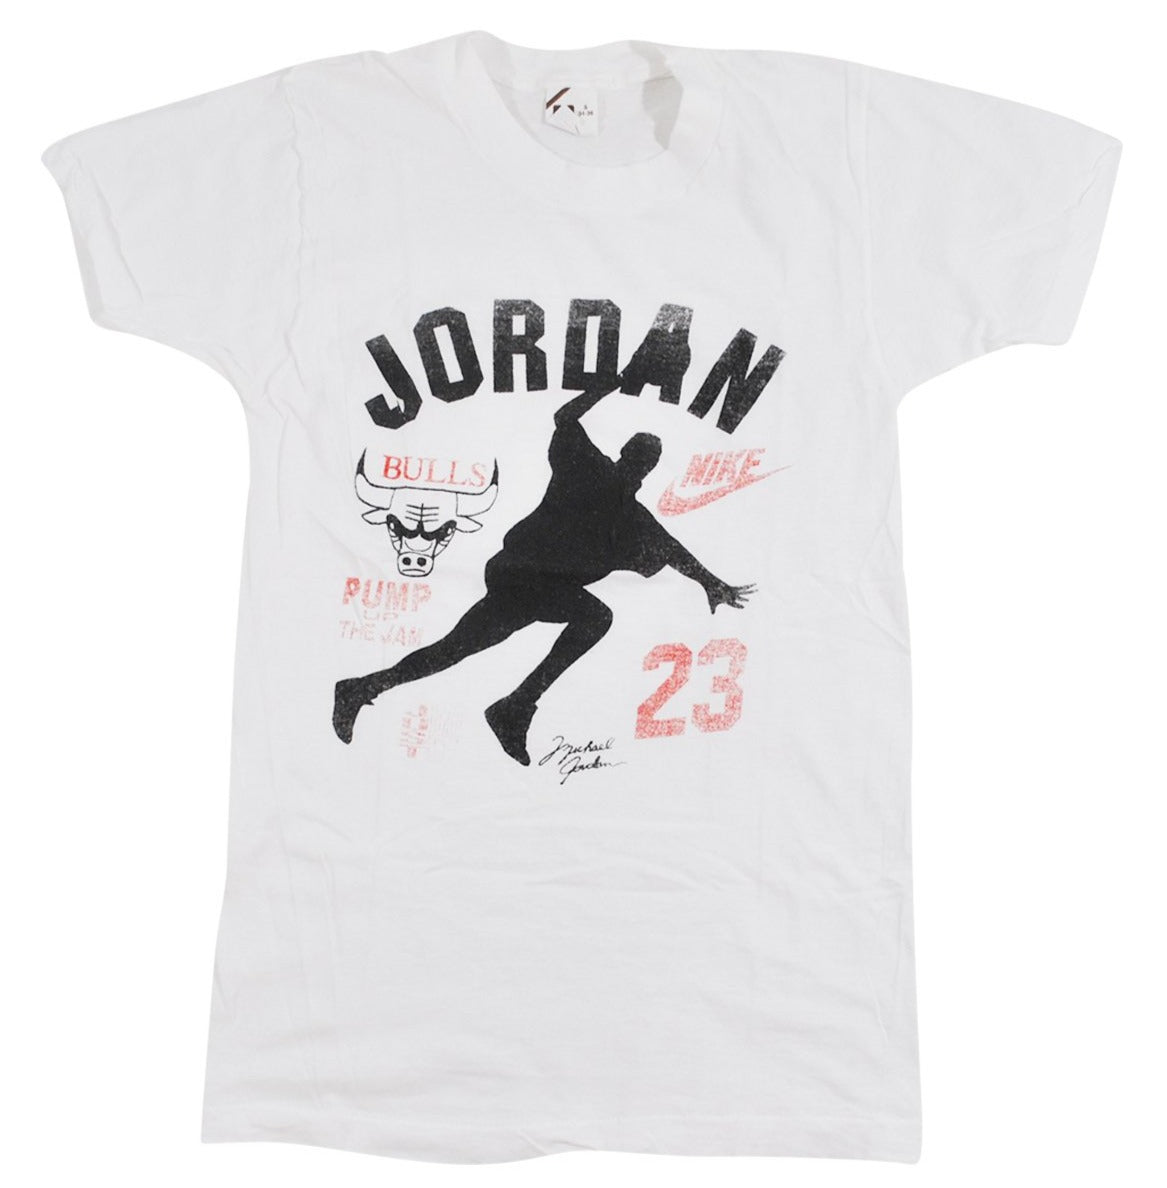 Michael Jordan Vintage Style Bootleg Graphic Tee T-shirt